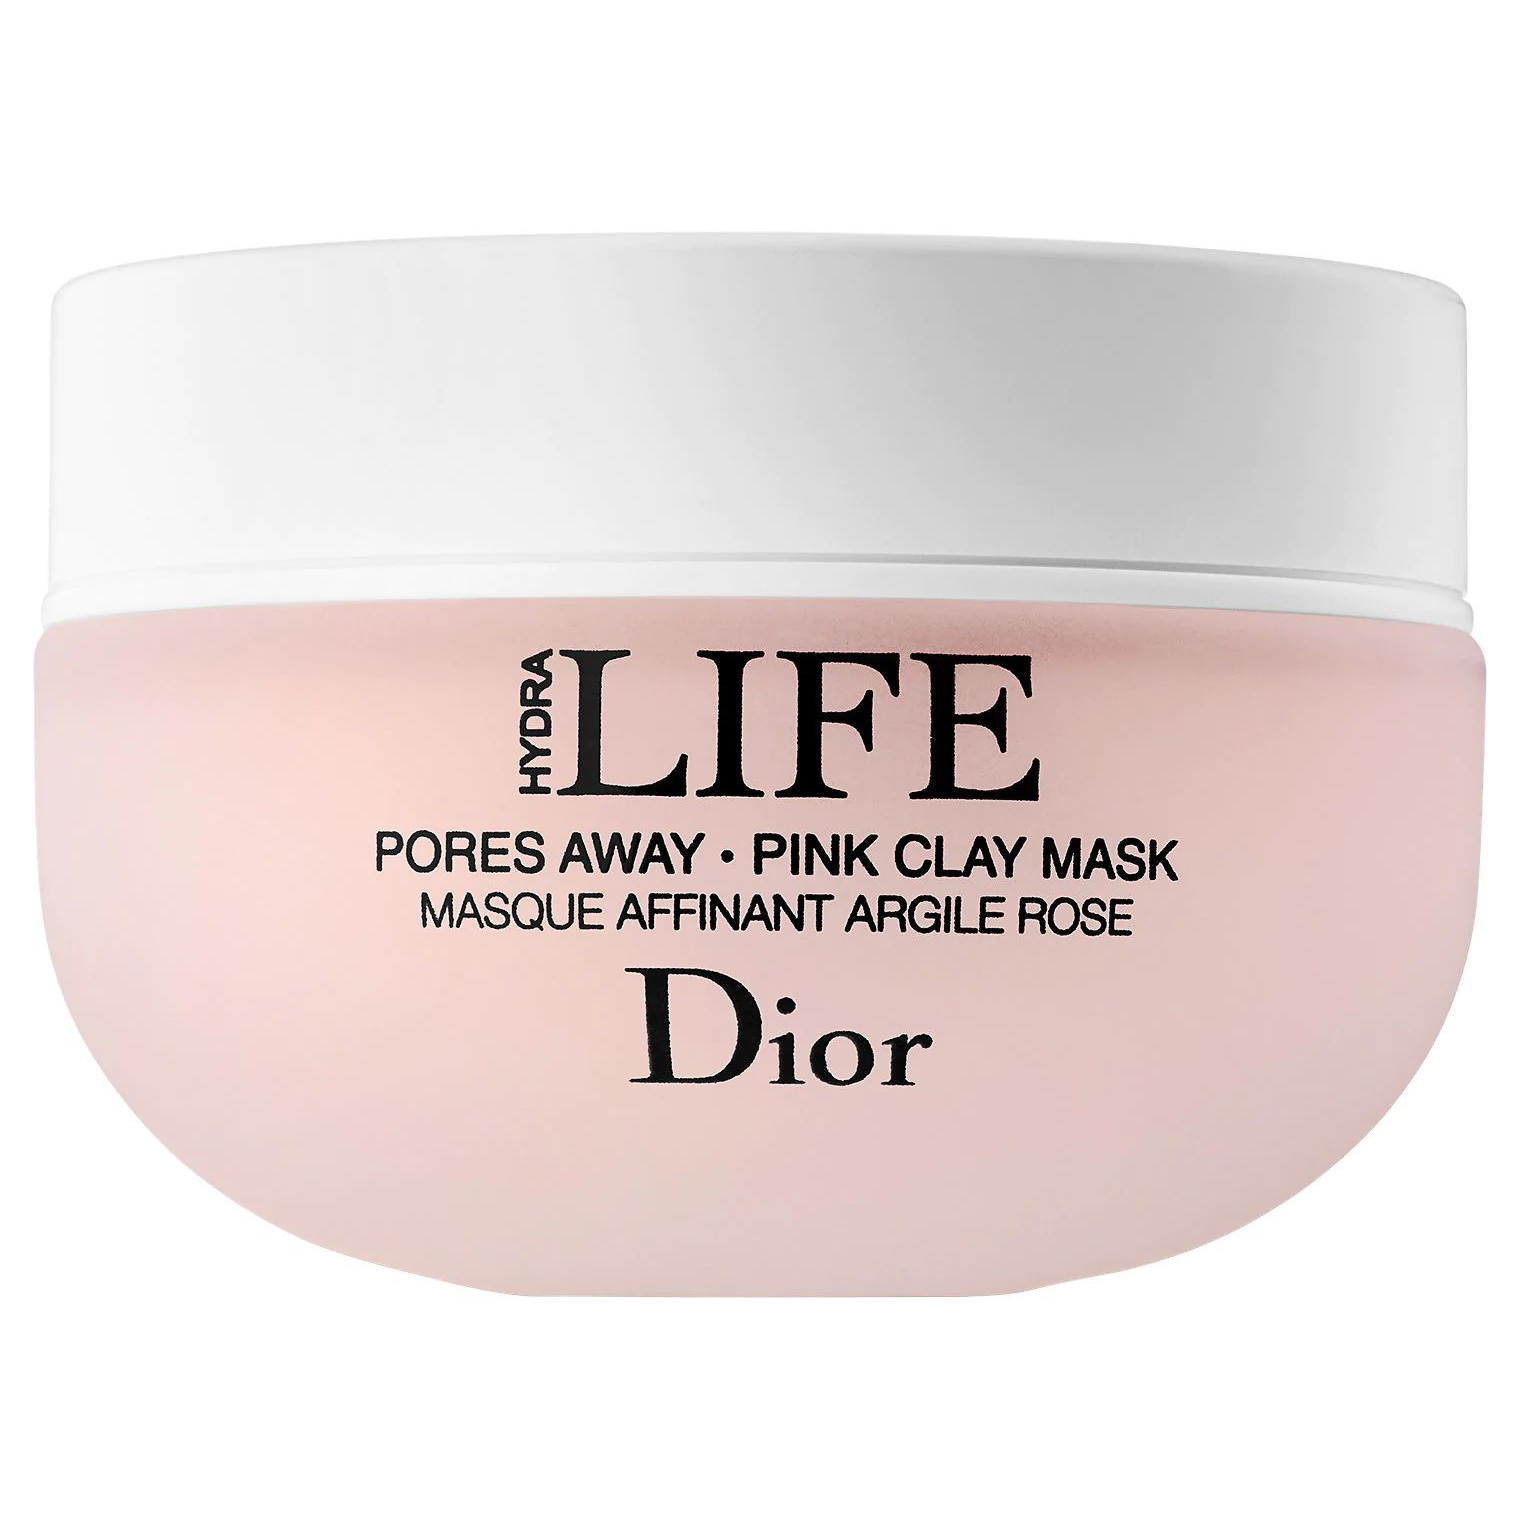 Dior Hydra Life Fresh Hydration Sorbet Creme reviews in Face Day Creams   Prestige  ChickAdvisor